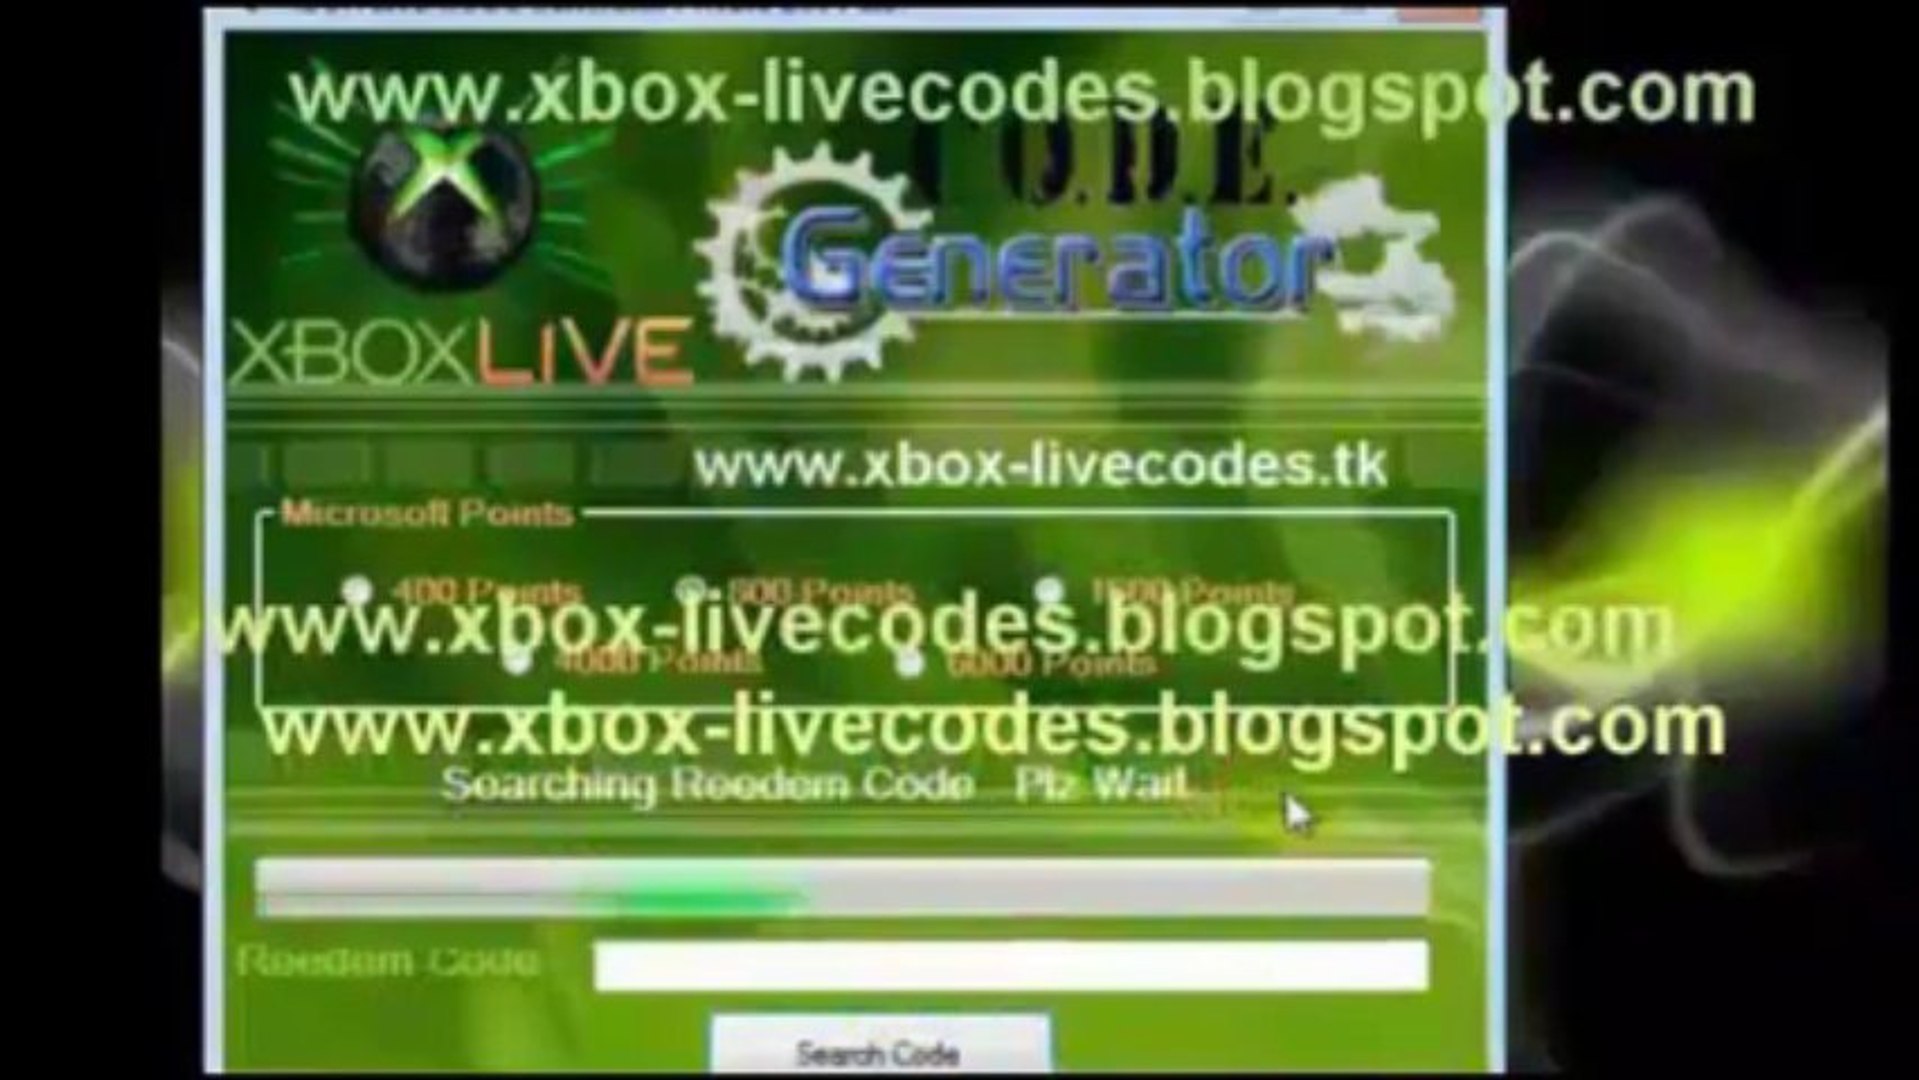 Free xbox live code generator download no surveys 2013 download